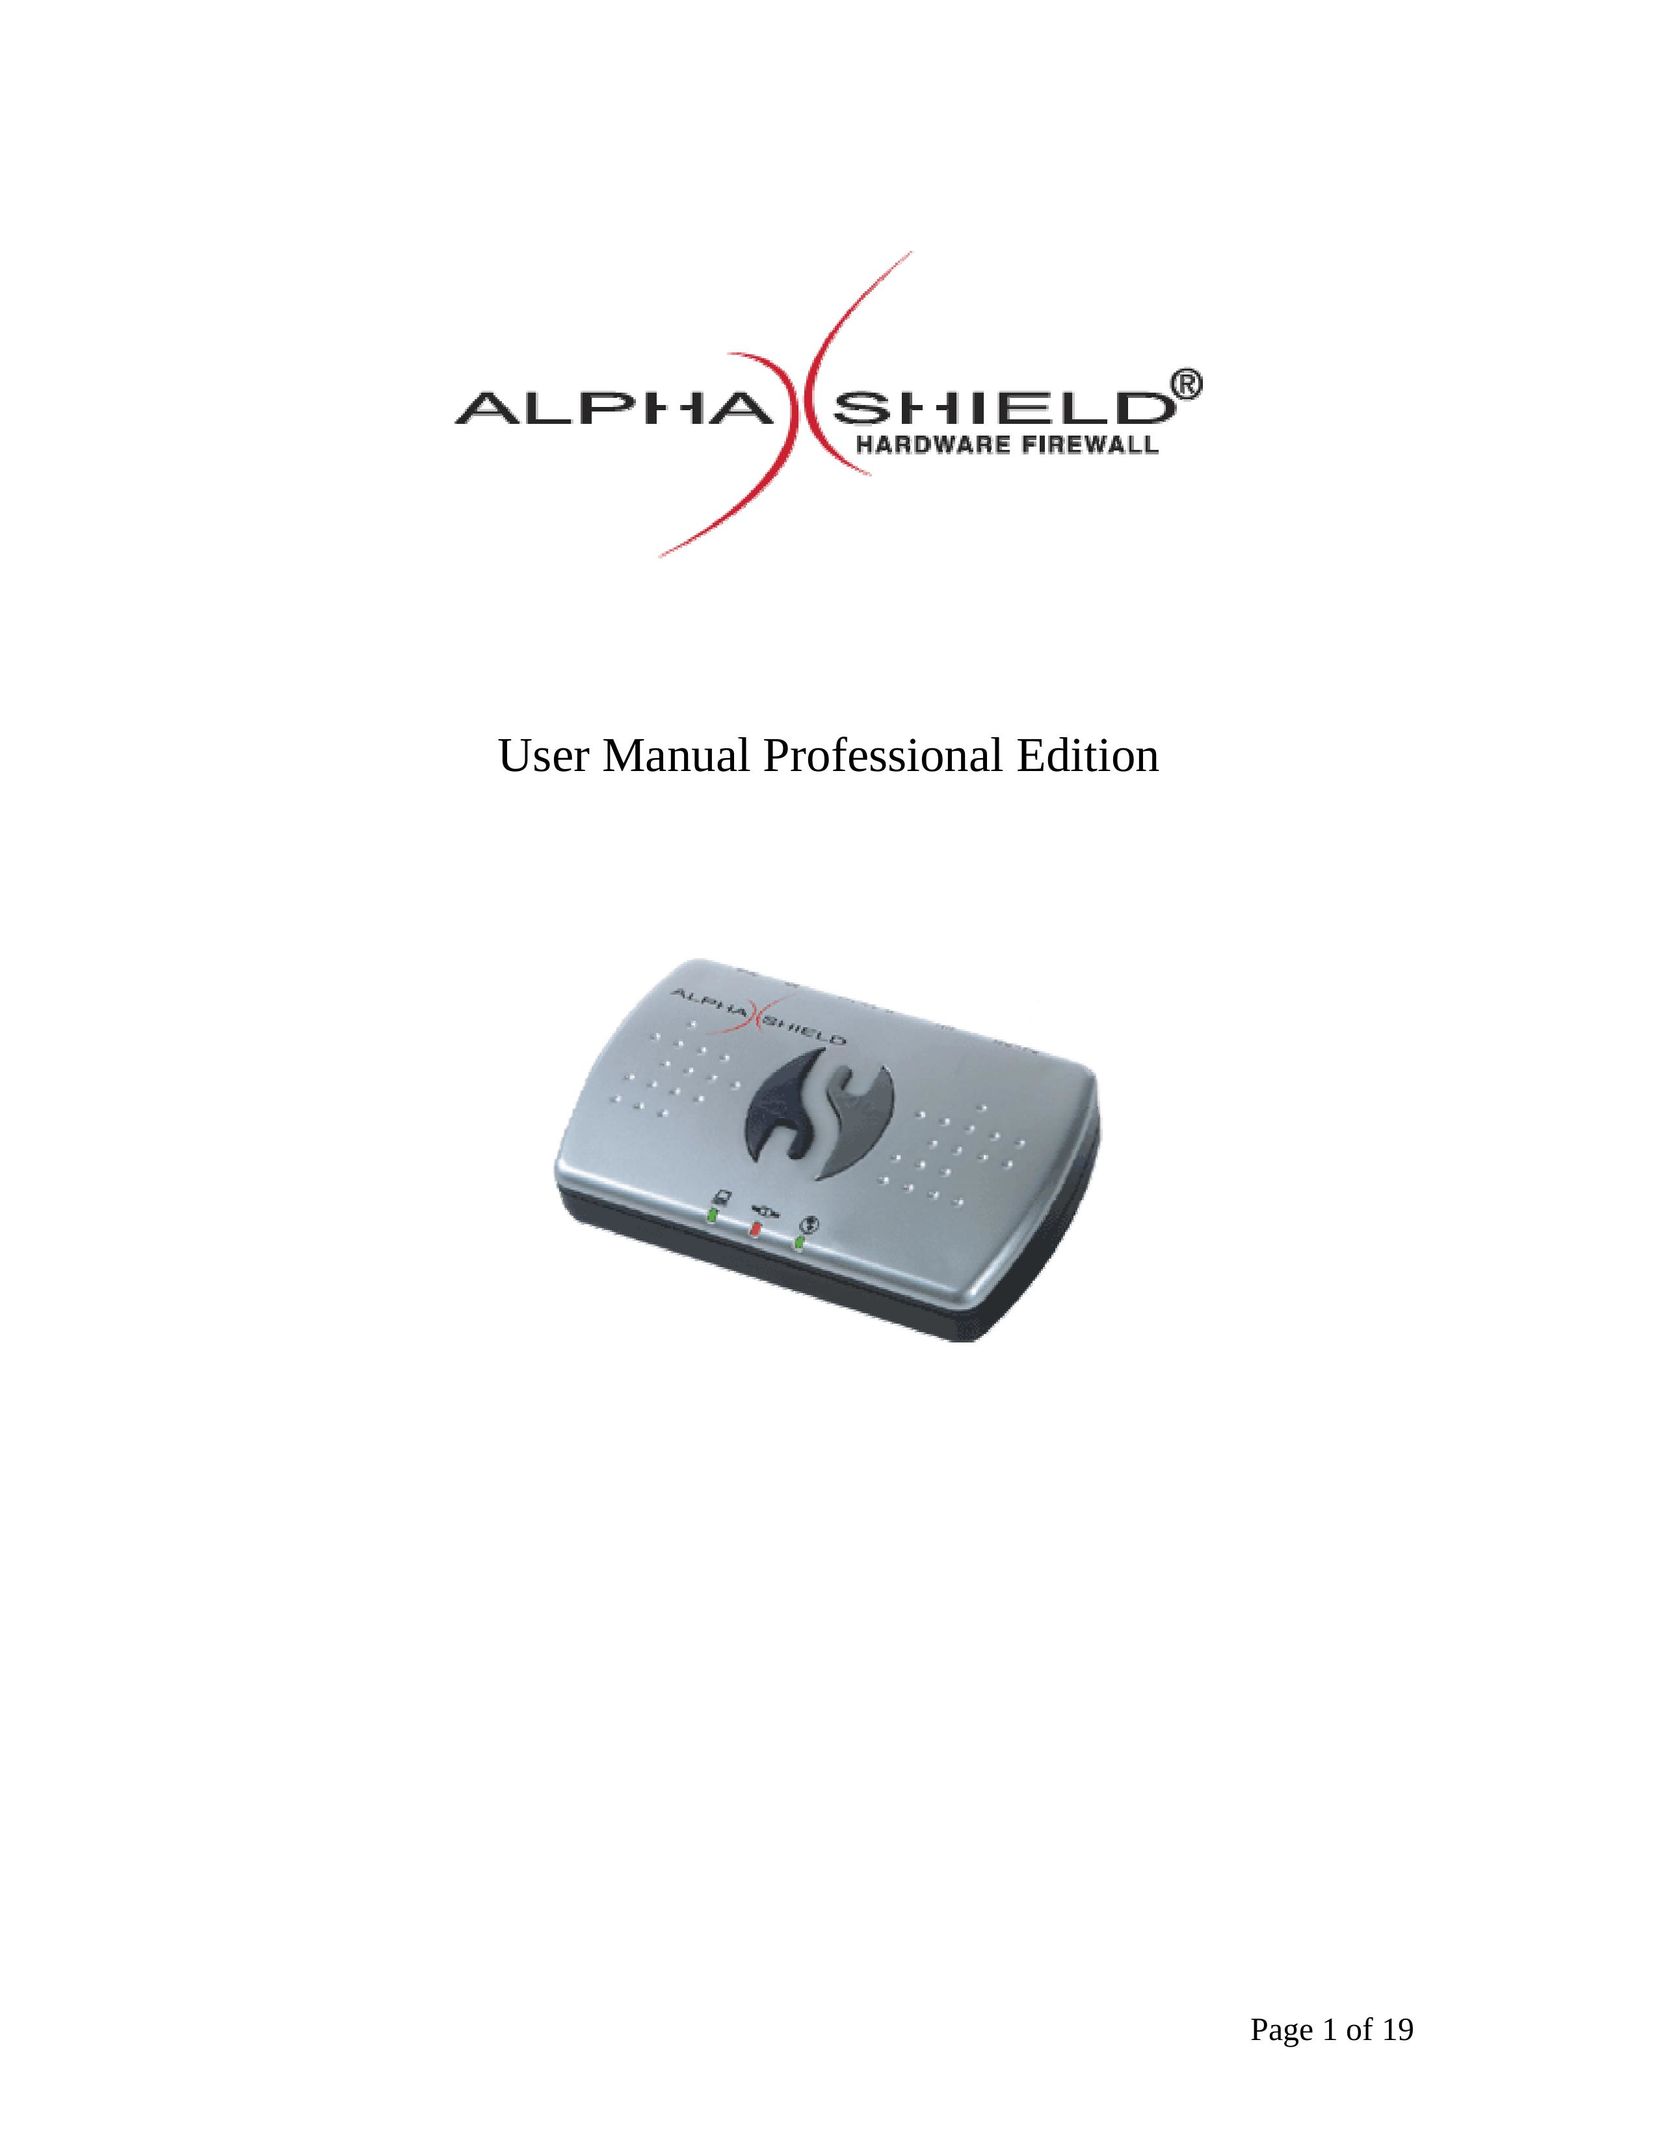 AlphaShield FIREWALL Network Card User Manual